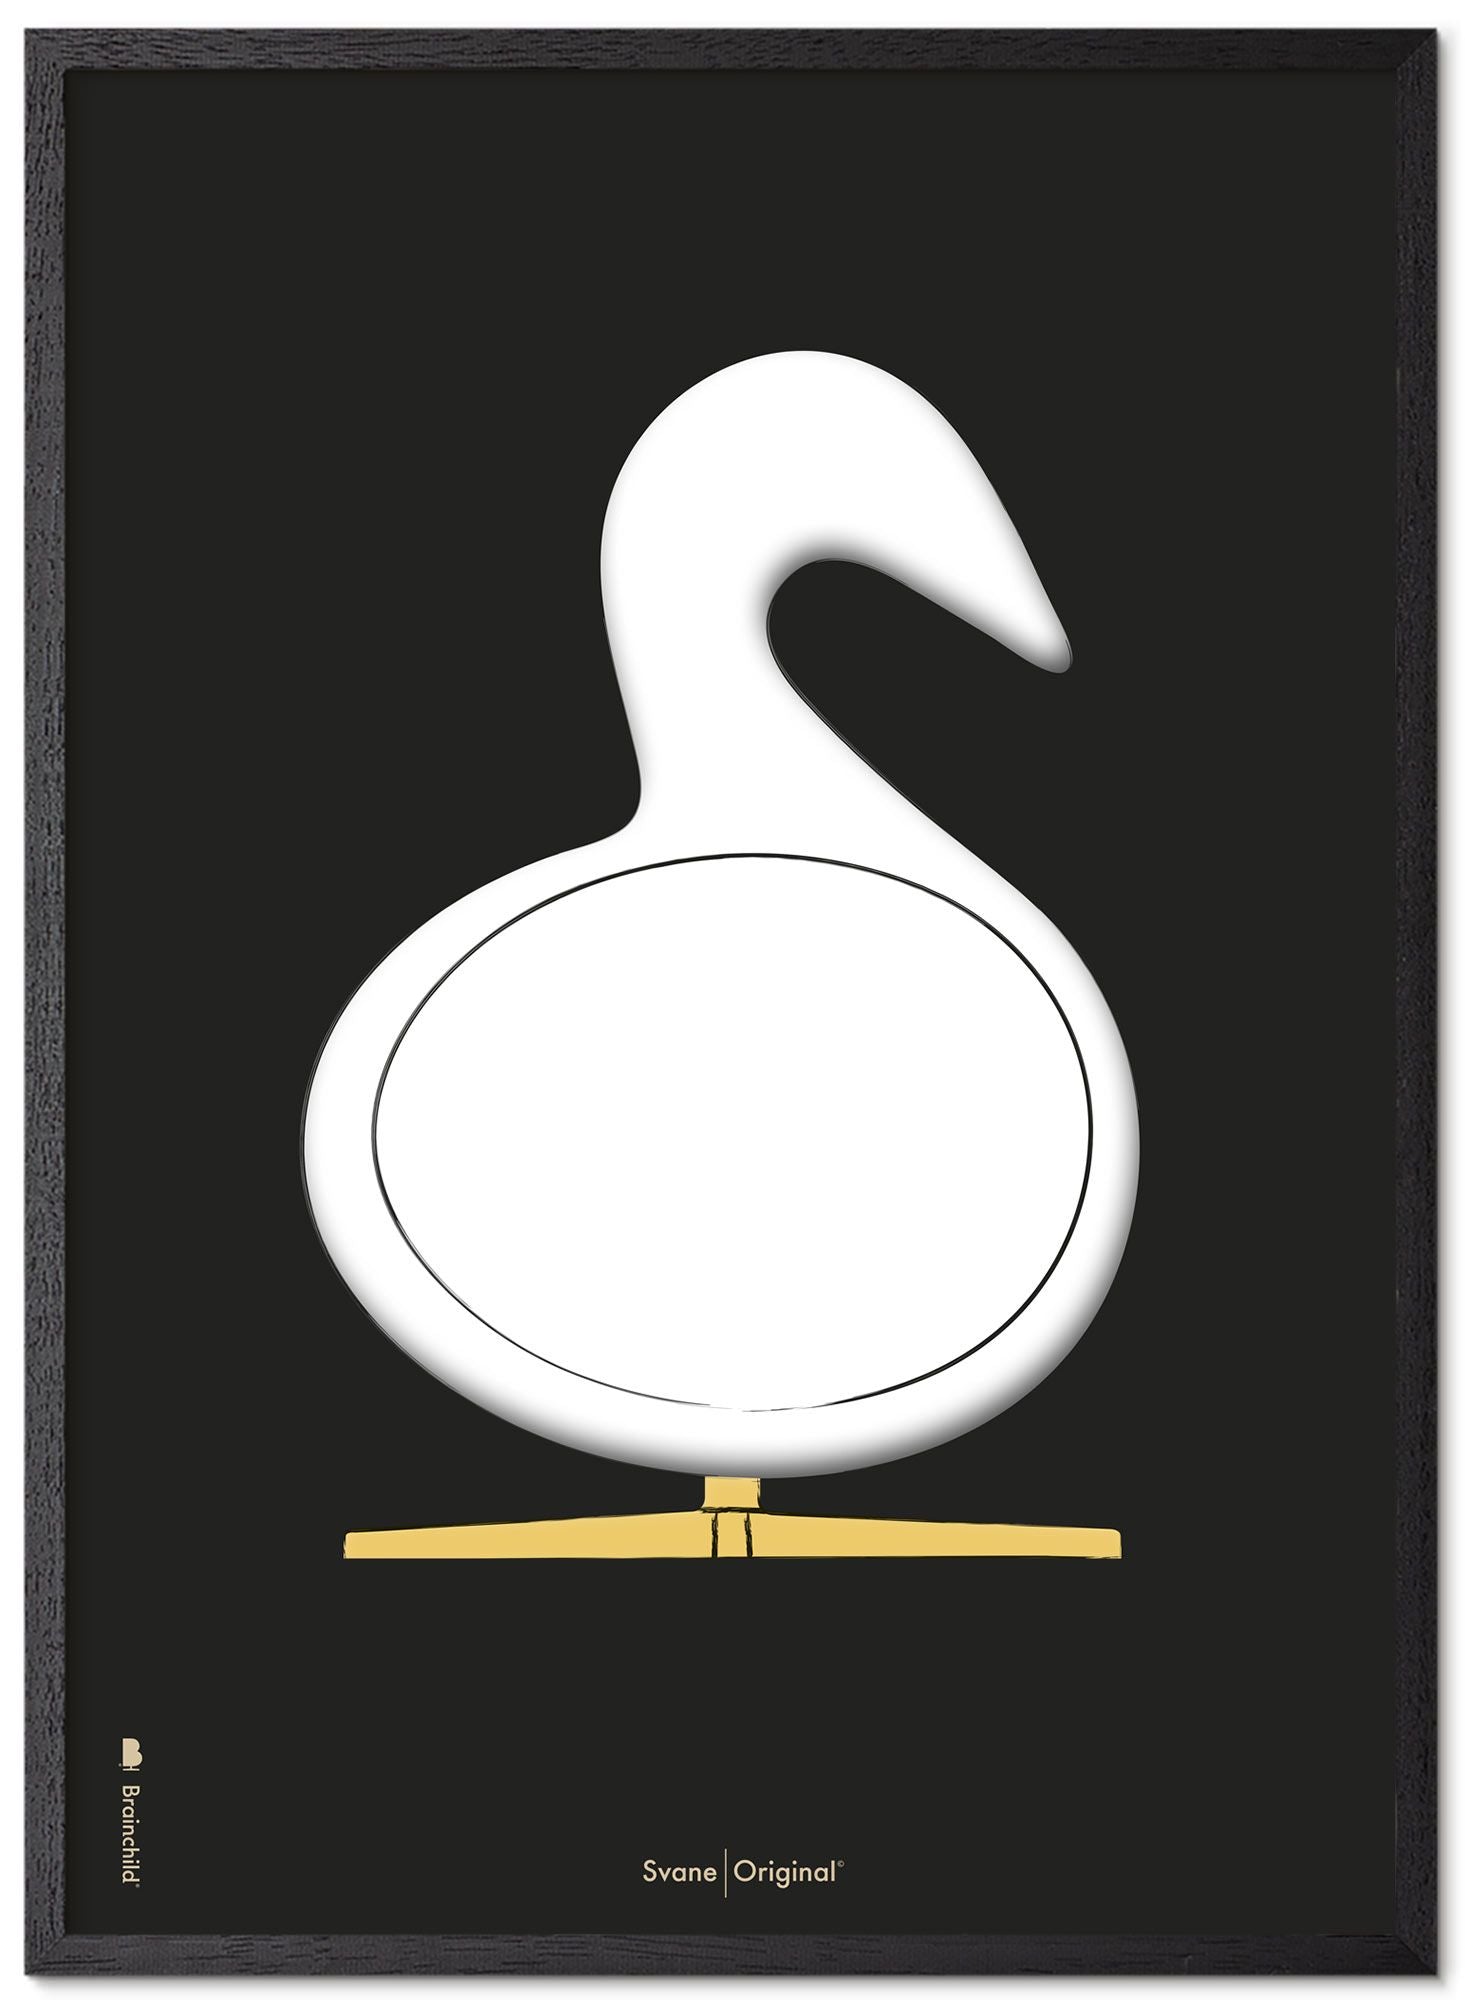 Brainchild Swan Design Sketch Poster Frame Made Of Black Lacquered Wood A5, Black Background